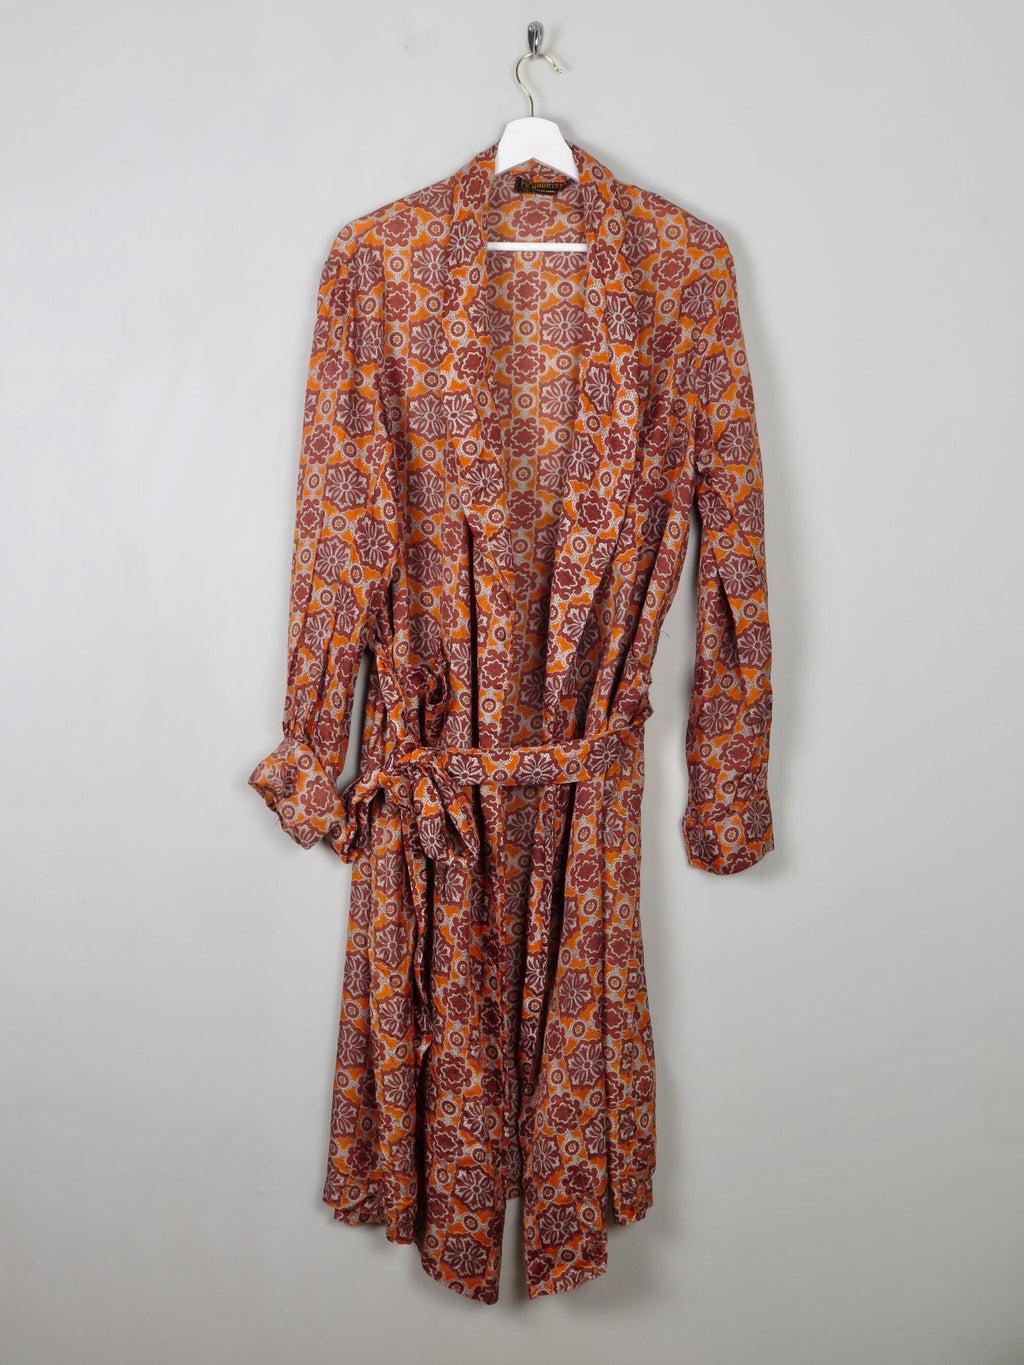 Men's Vintage Hortex Dressing Gown M/L - The Harlequin